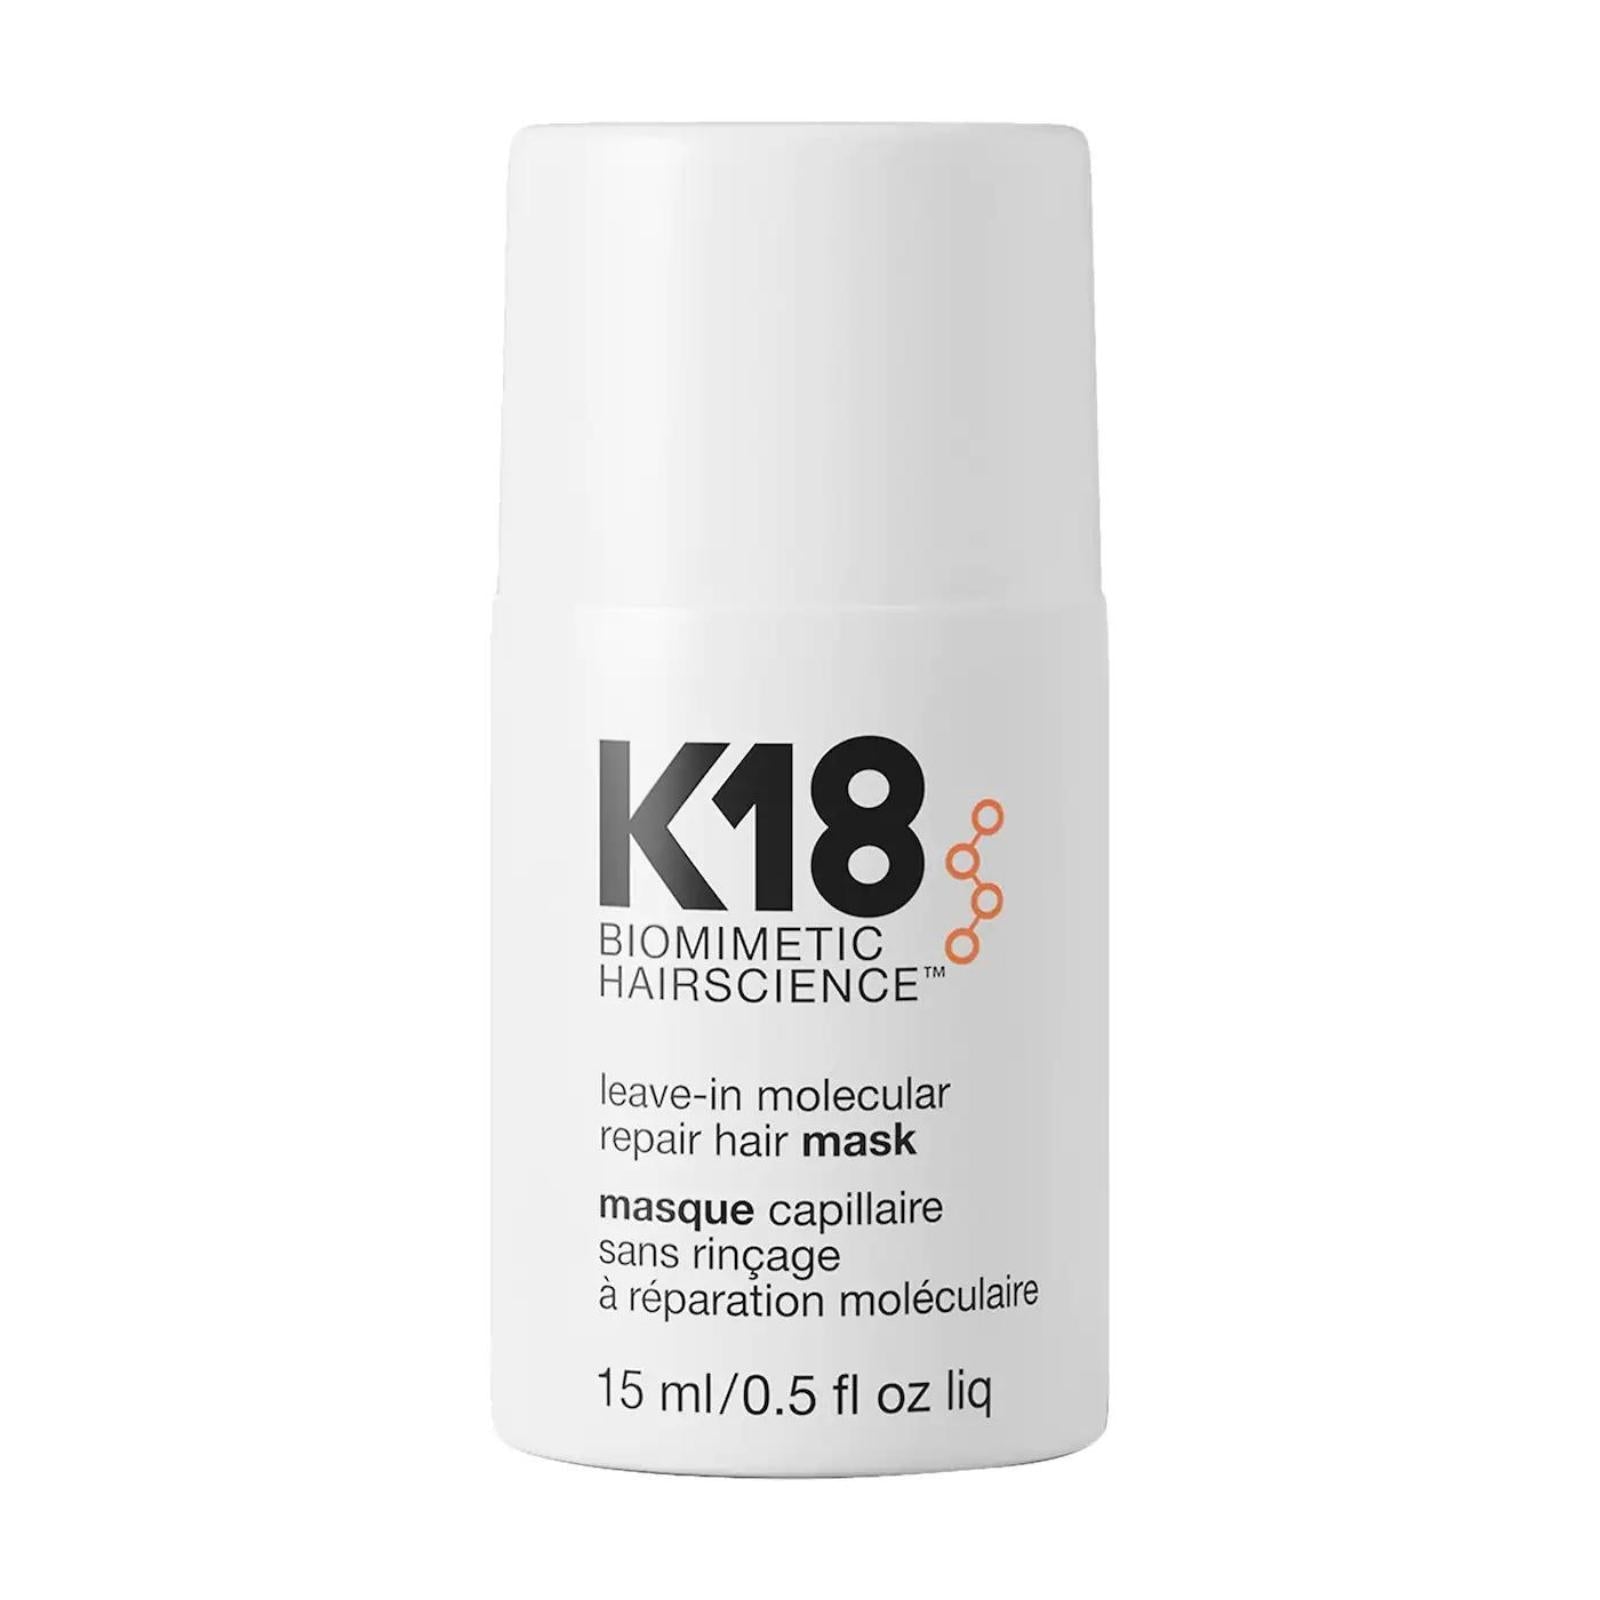 K18 K18 | Leave-In Molecular Repair Hair Mask | 15ml - SkinShop